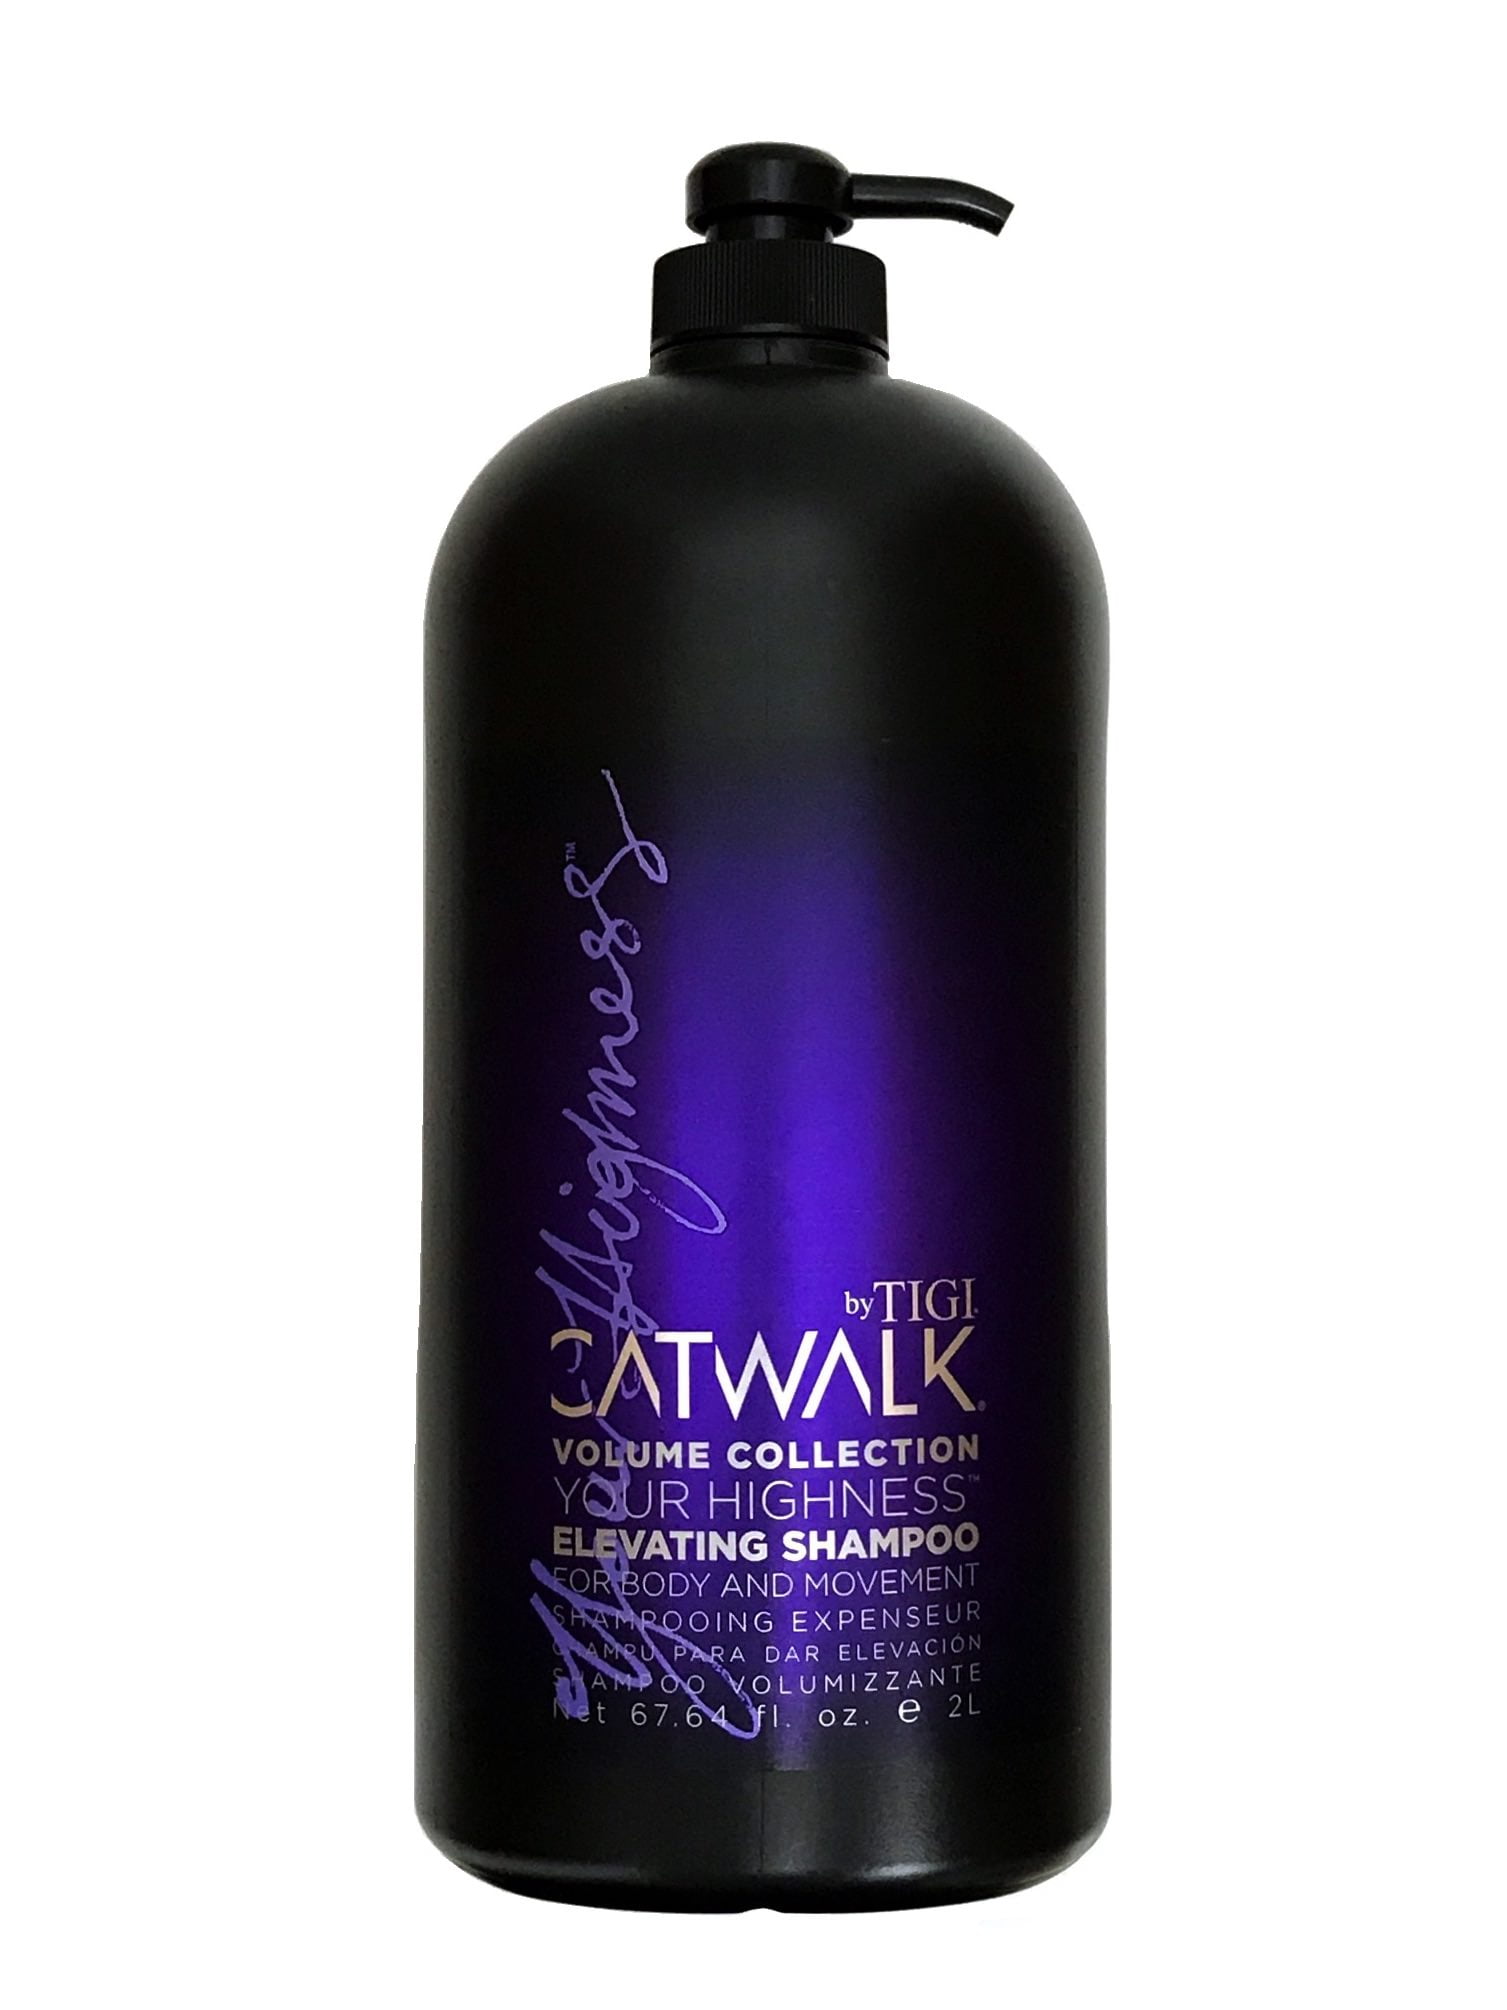 Tigi Catwalk Volume Collection Highness Elevating Shampoo 67.64 oz - Walmart.com